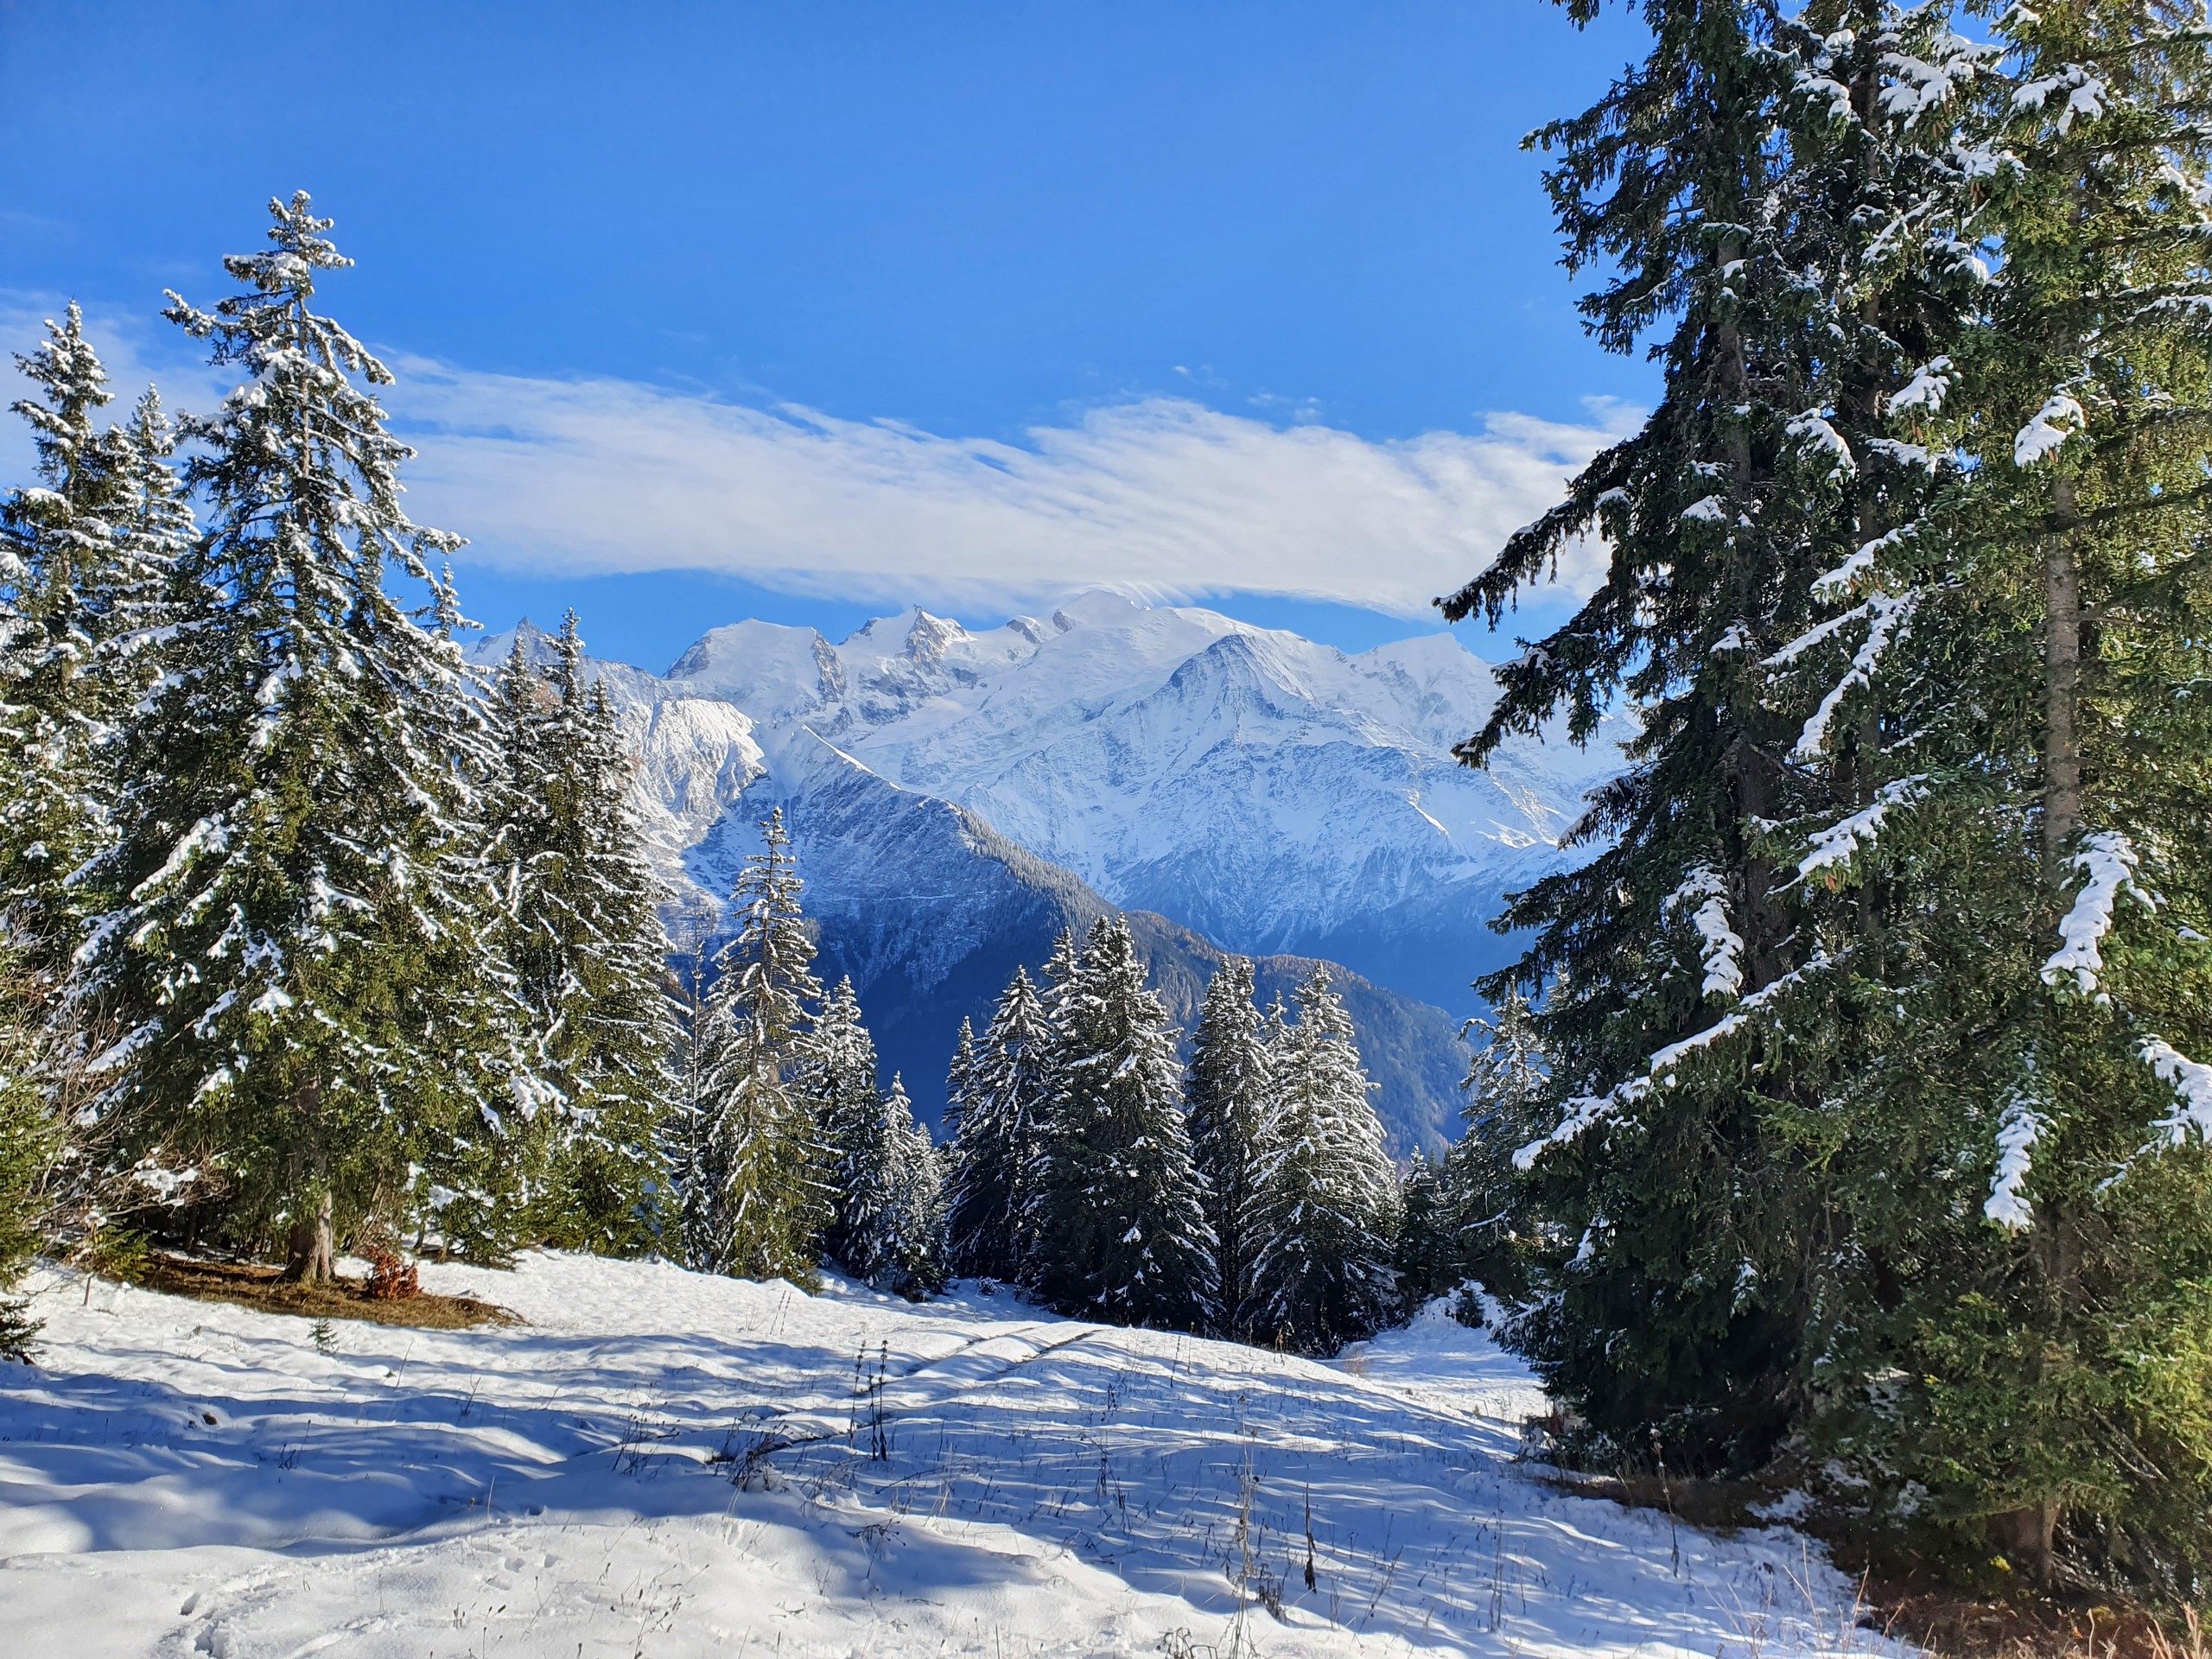 Powdery Alps in the Mont Blanc region, France